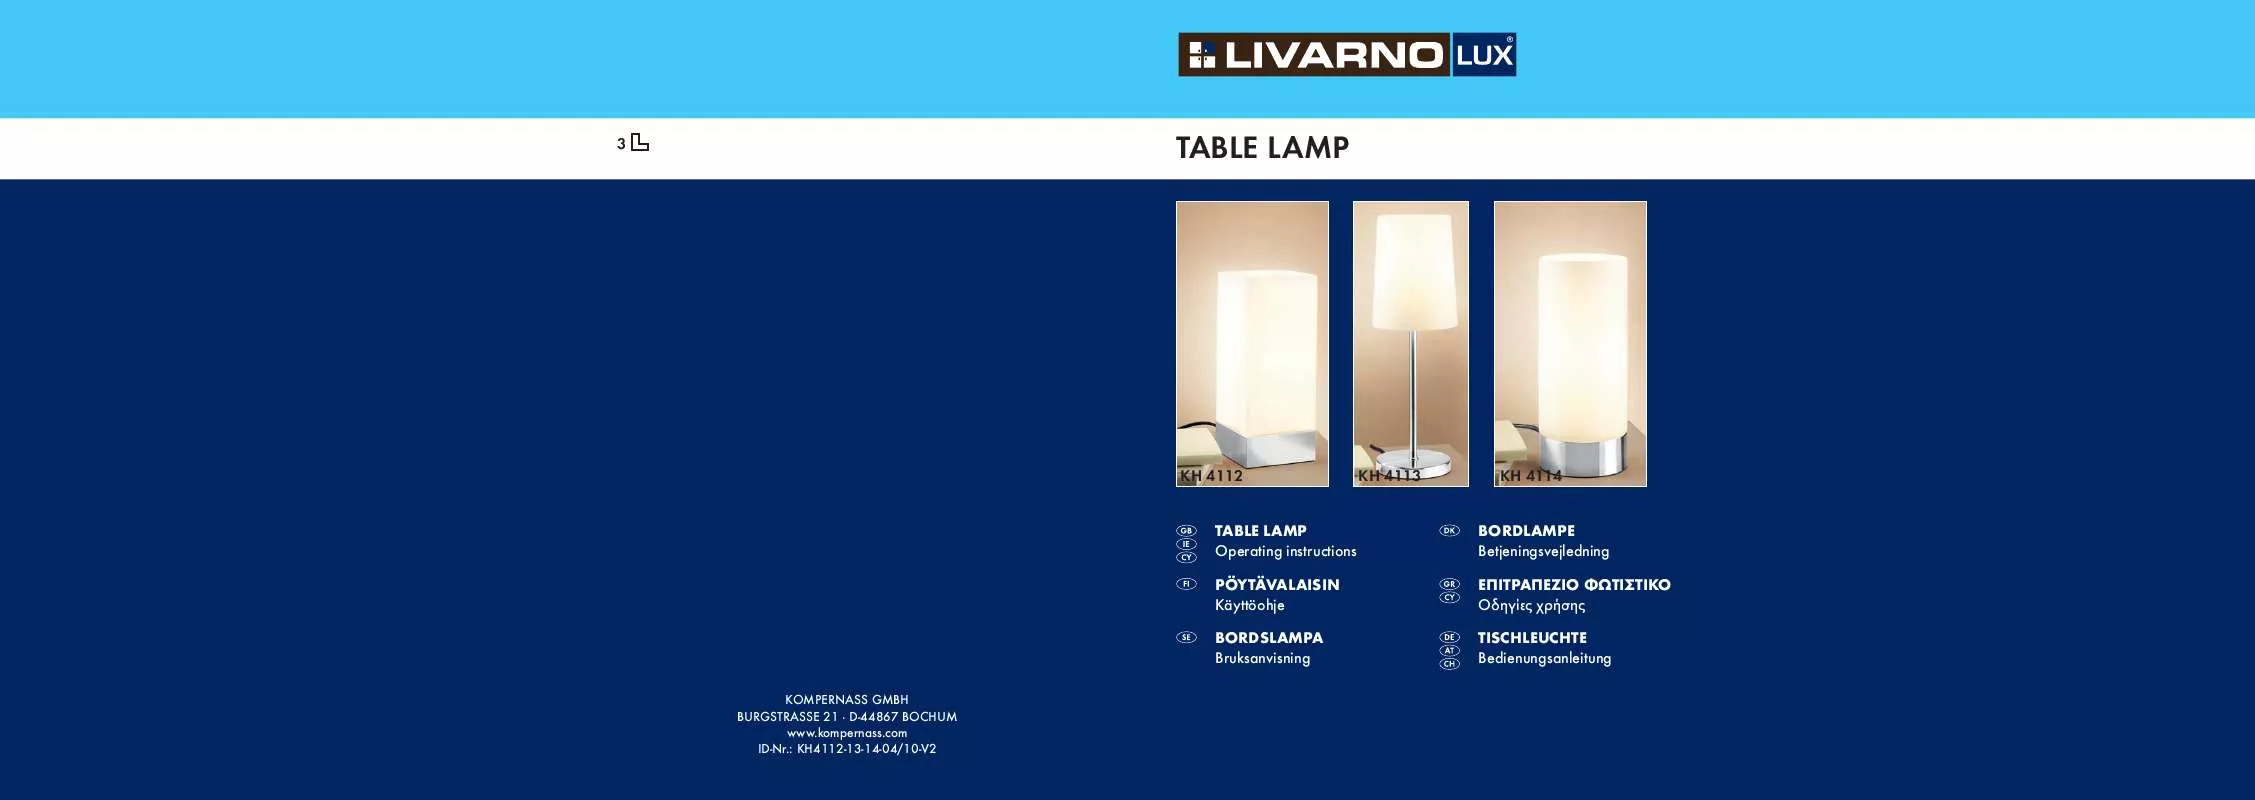 Mode d'emploi LIVARNO KH 4112-4114 TABLE LAMP